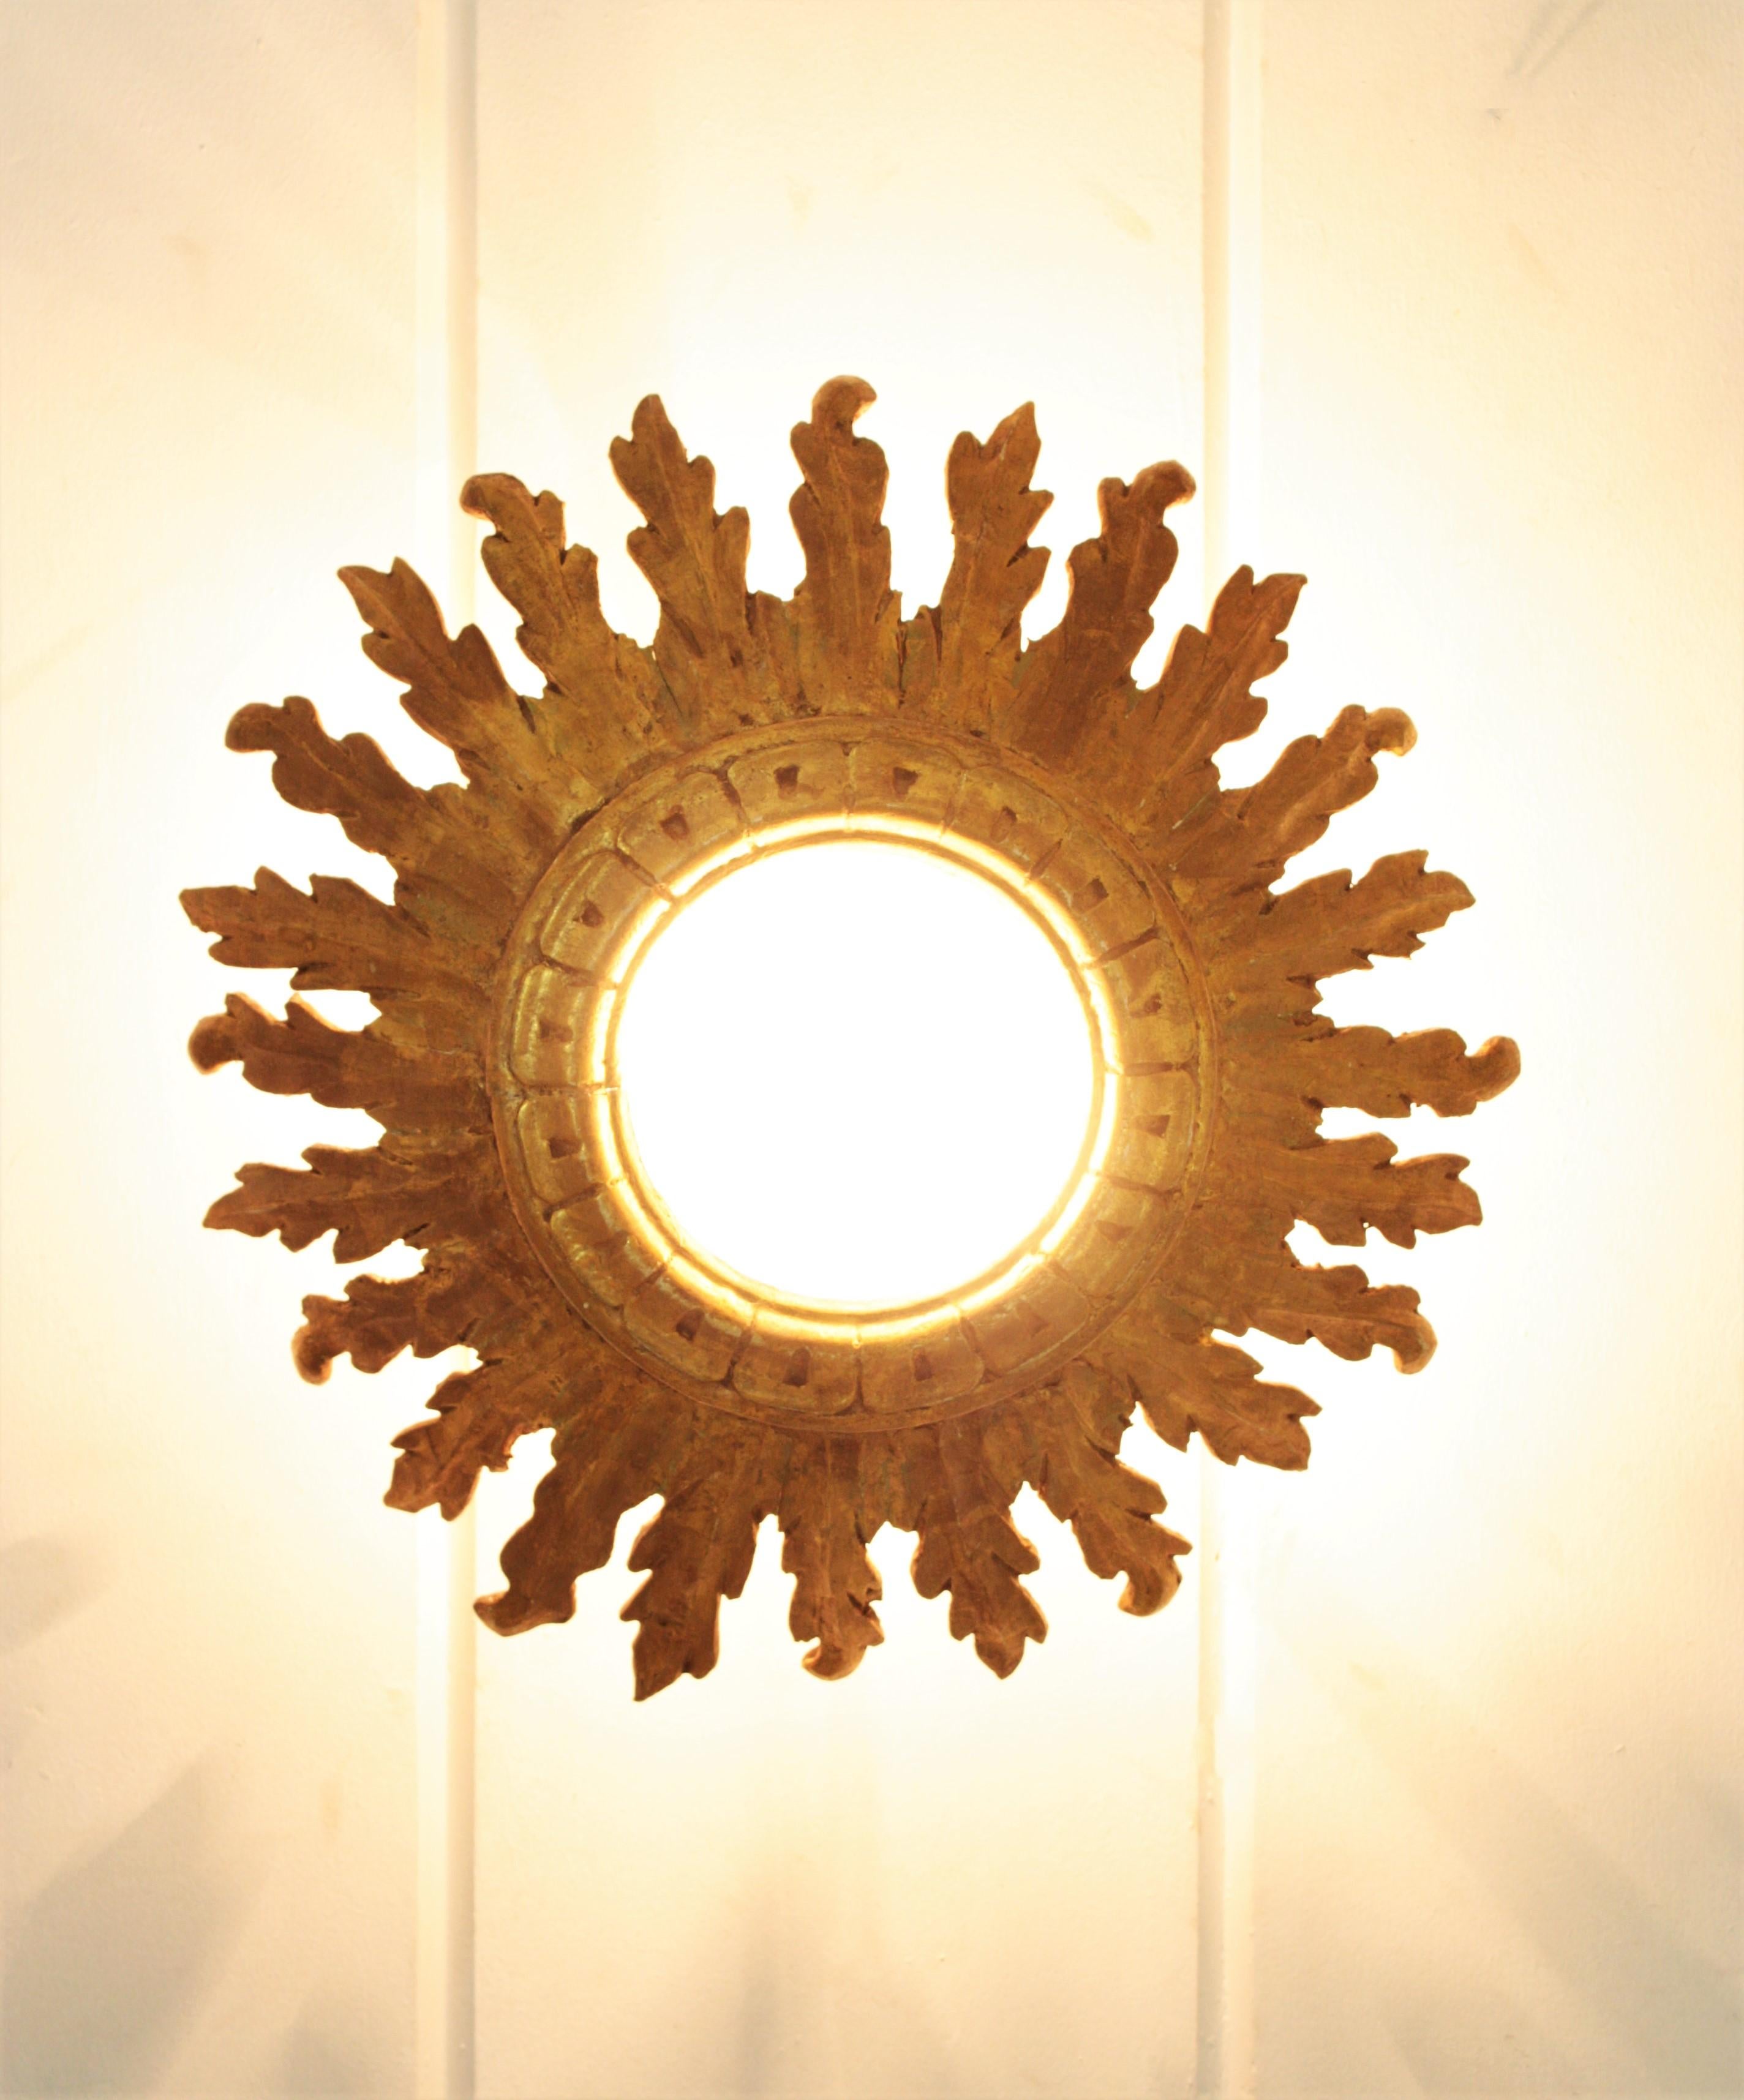 Sunburst Crown Ceiling Flush Mount Light Fixture in Giltwood, Spanish Baroque For Sale 3